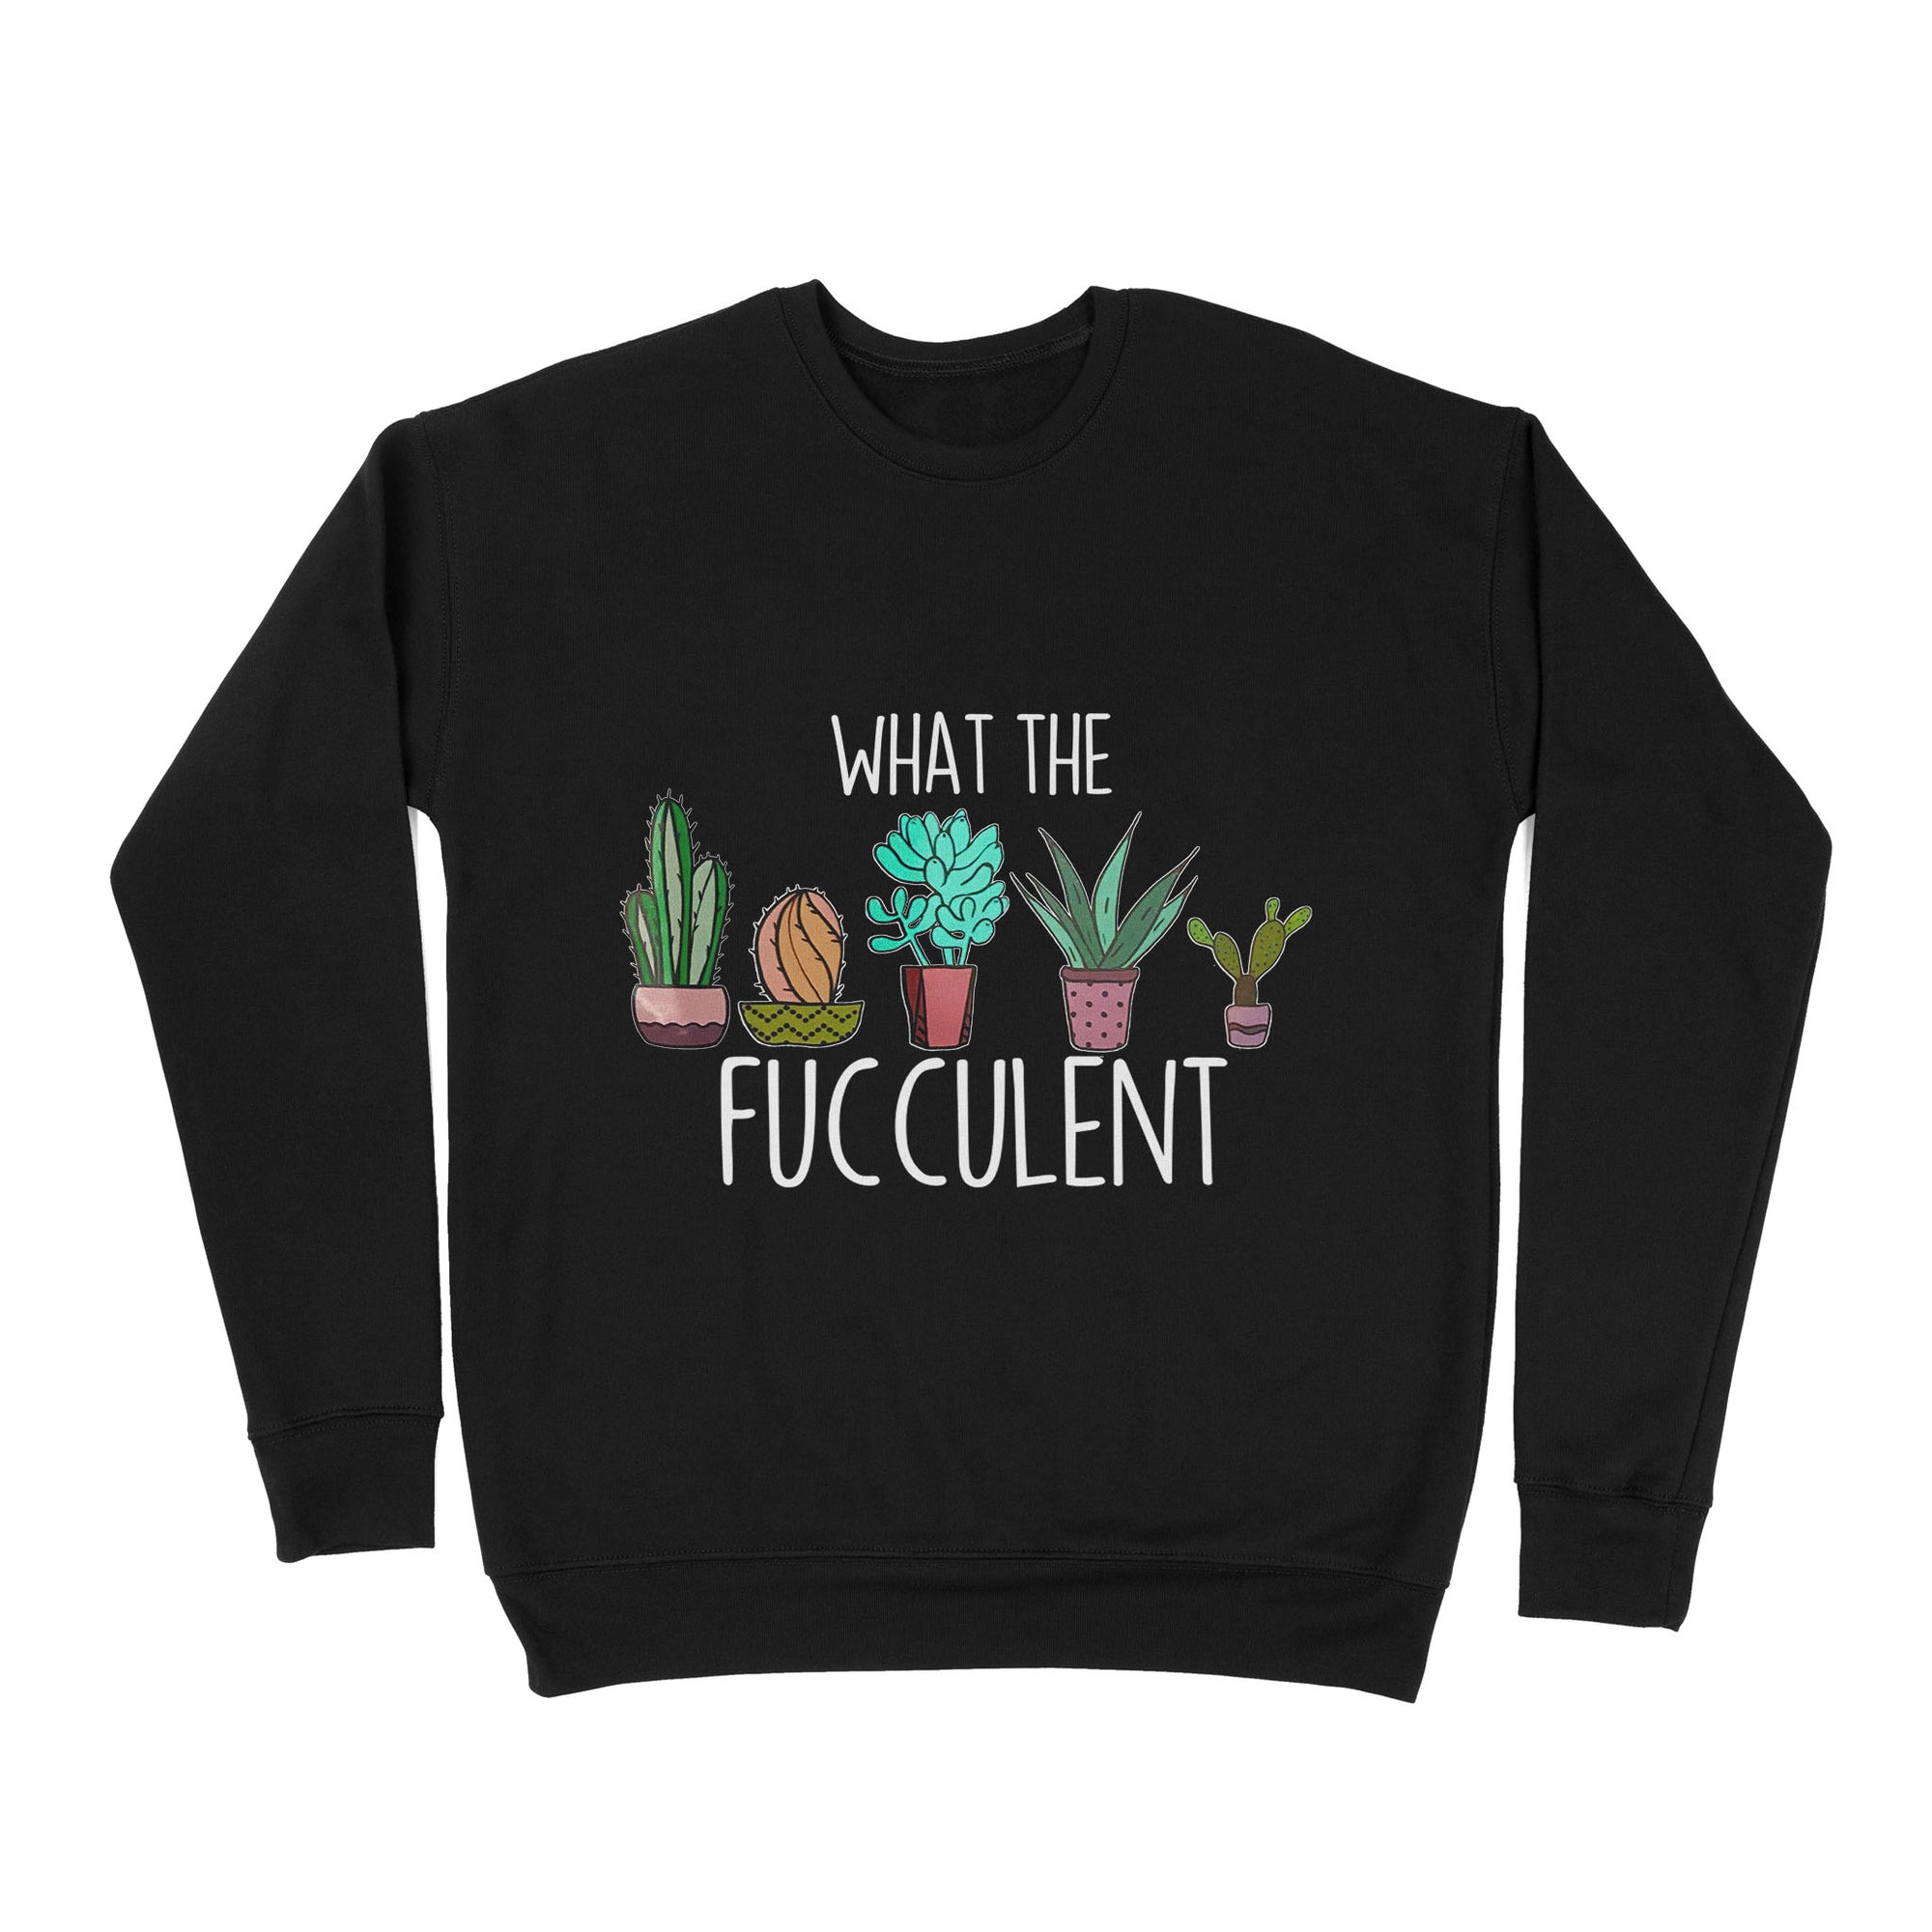 Premium Crew Neck Sweatshirt - What the Fucculent Cactus Succulents Plants Gardening